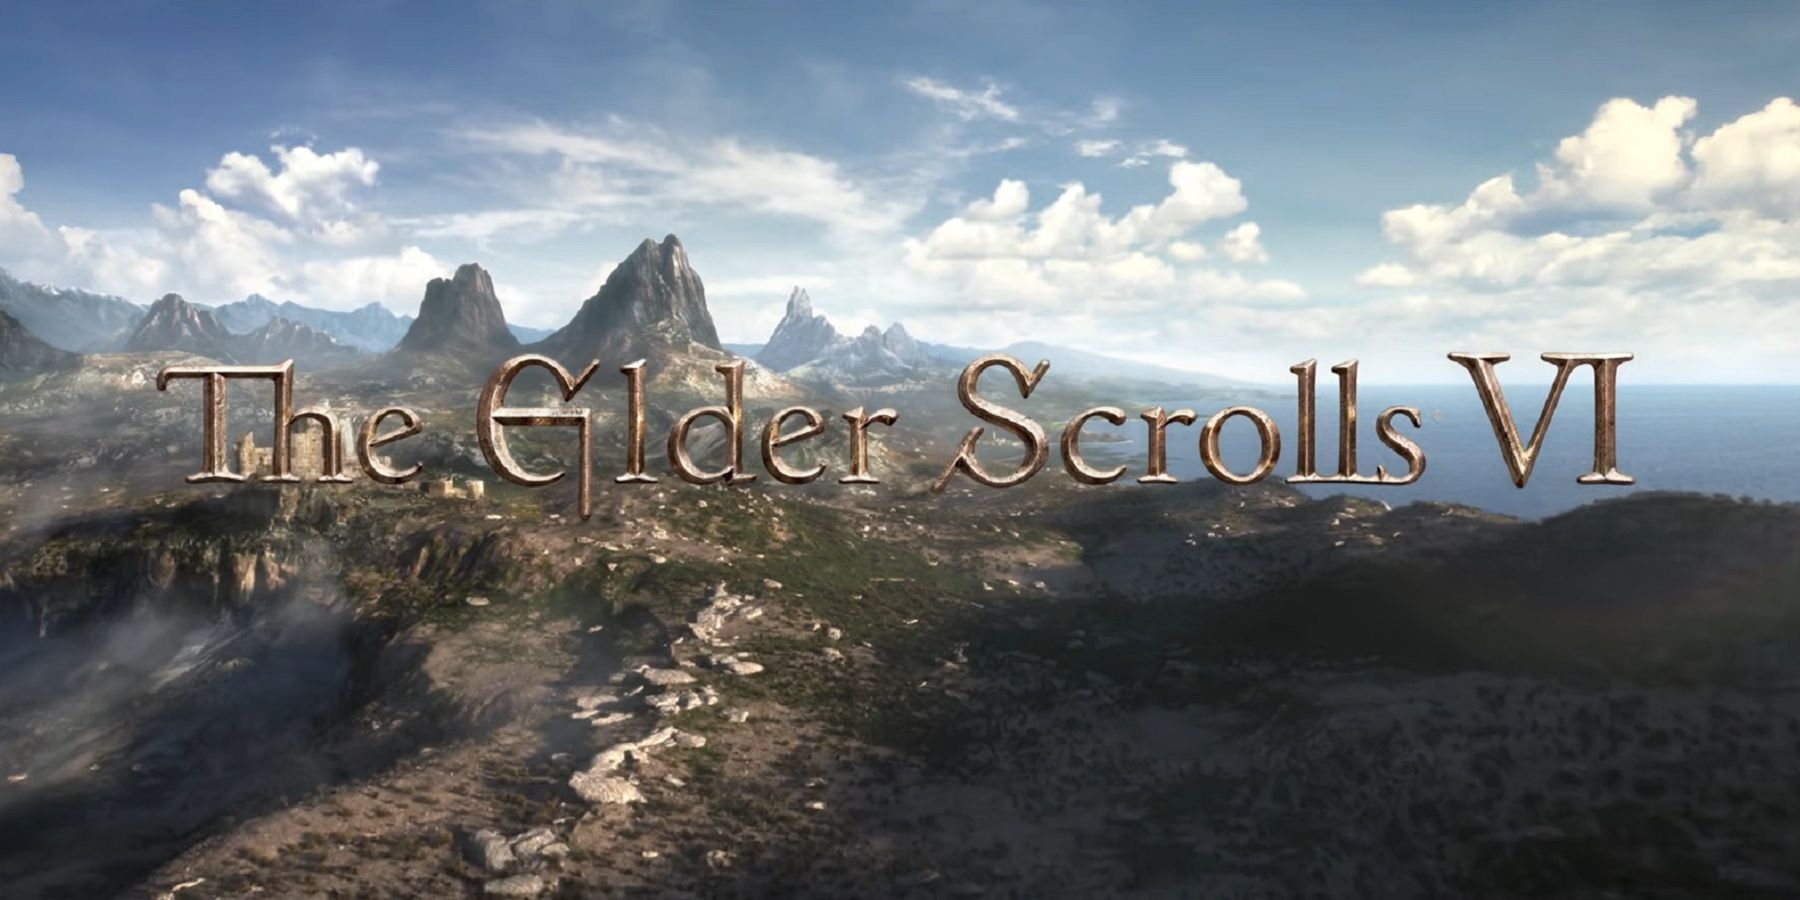 the elder scrolls 6 logo